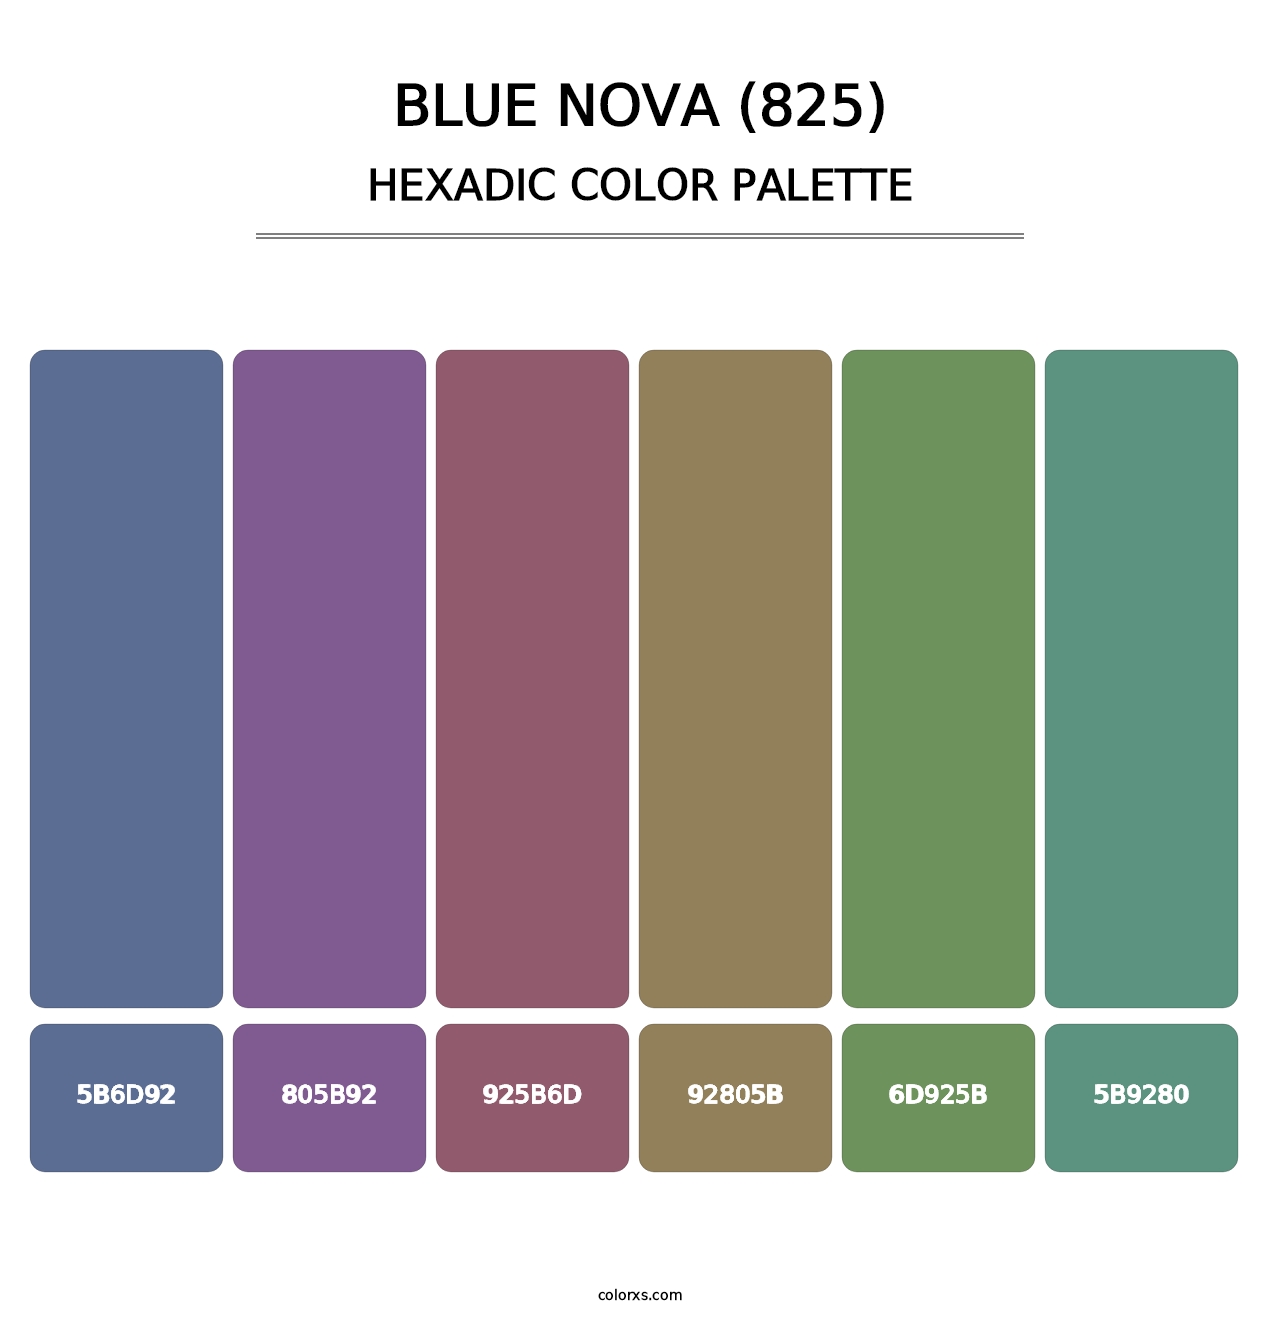 Blue Nova (825) - Hexadic Color Palette